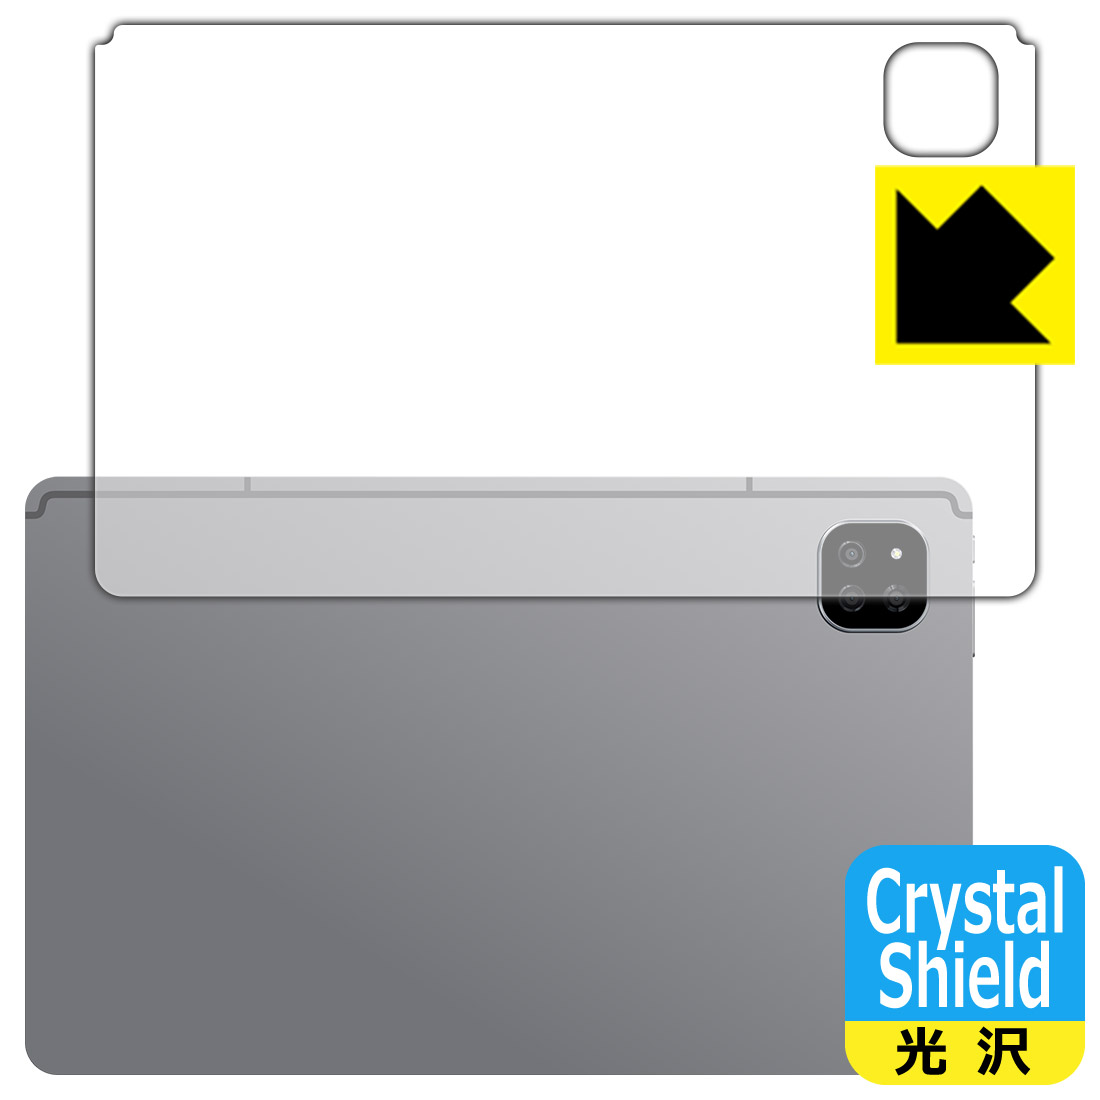 Crystal Shield【光沢】保護フィルム ALLDOCUBE iPlay 60 (背面用) 3枚セット 日本製 自社製造直販